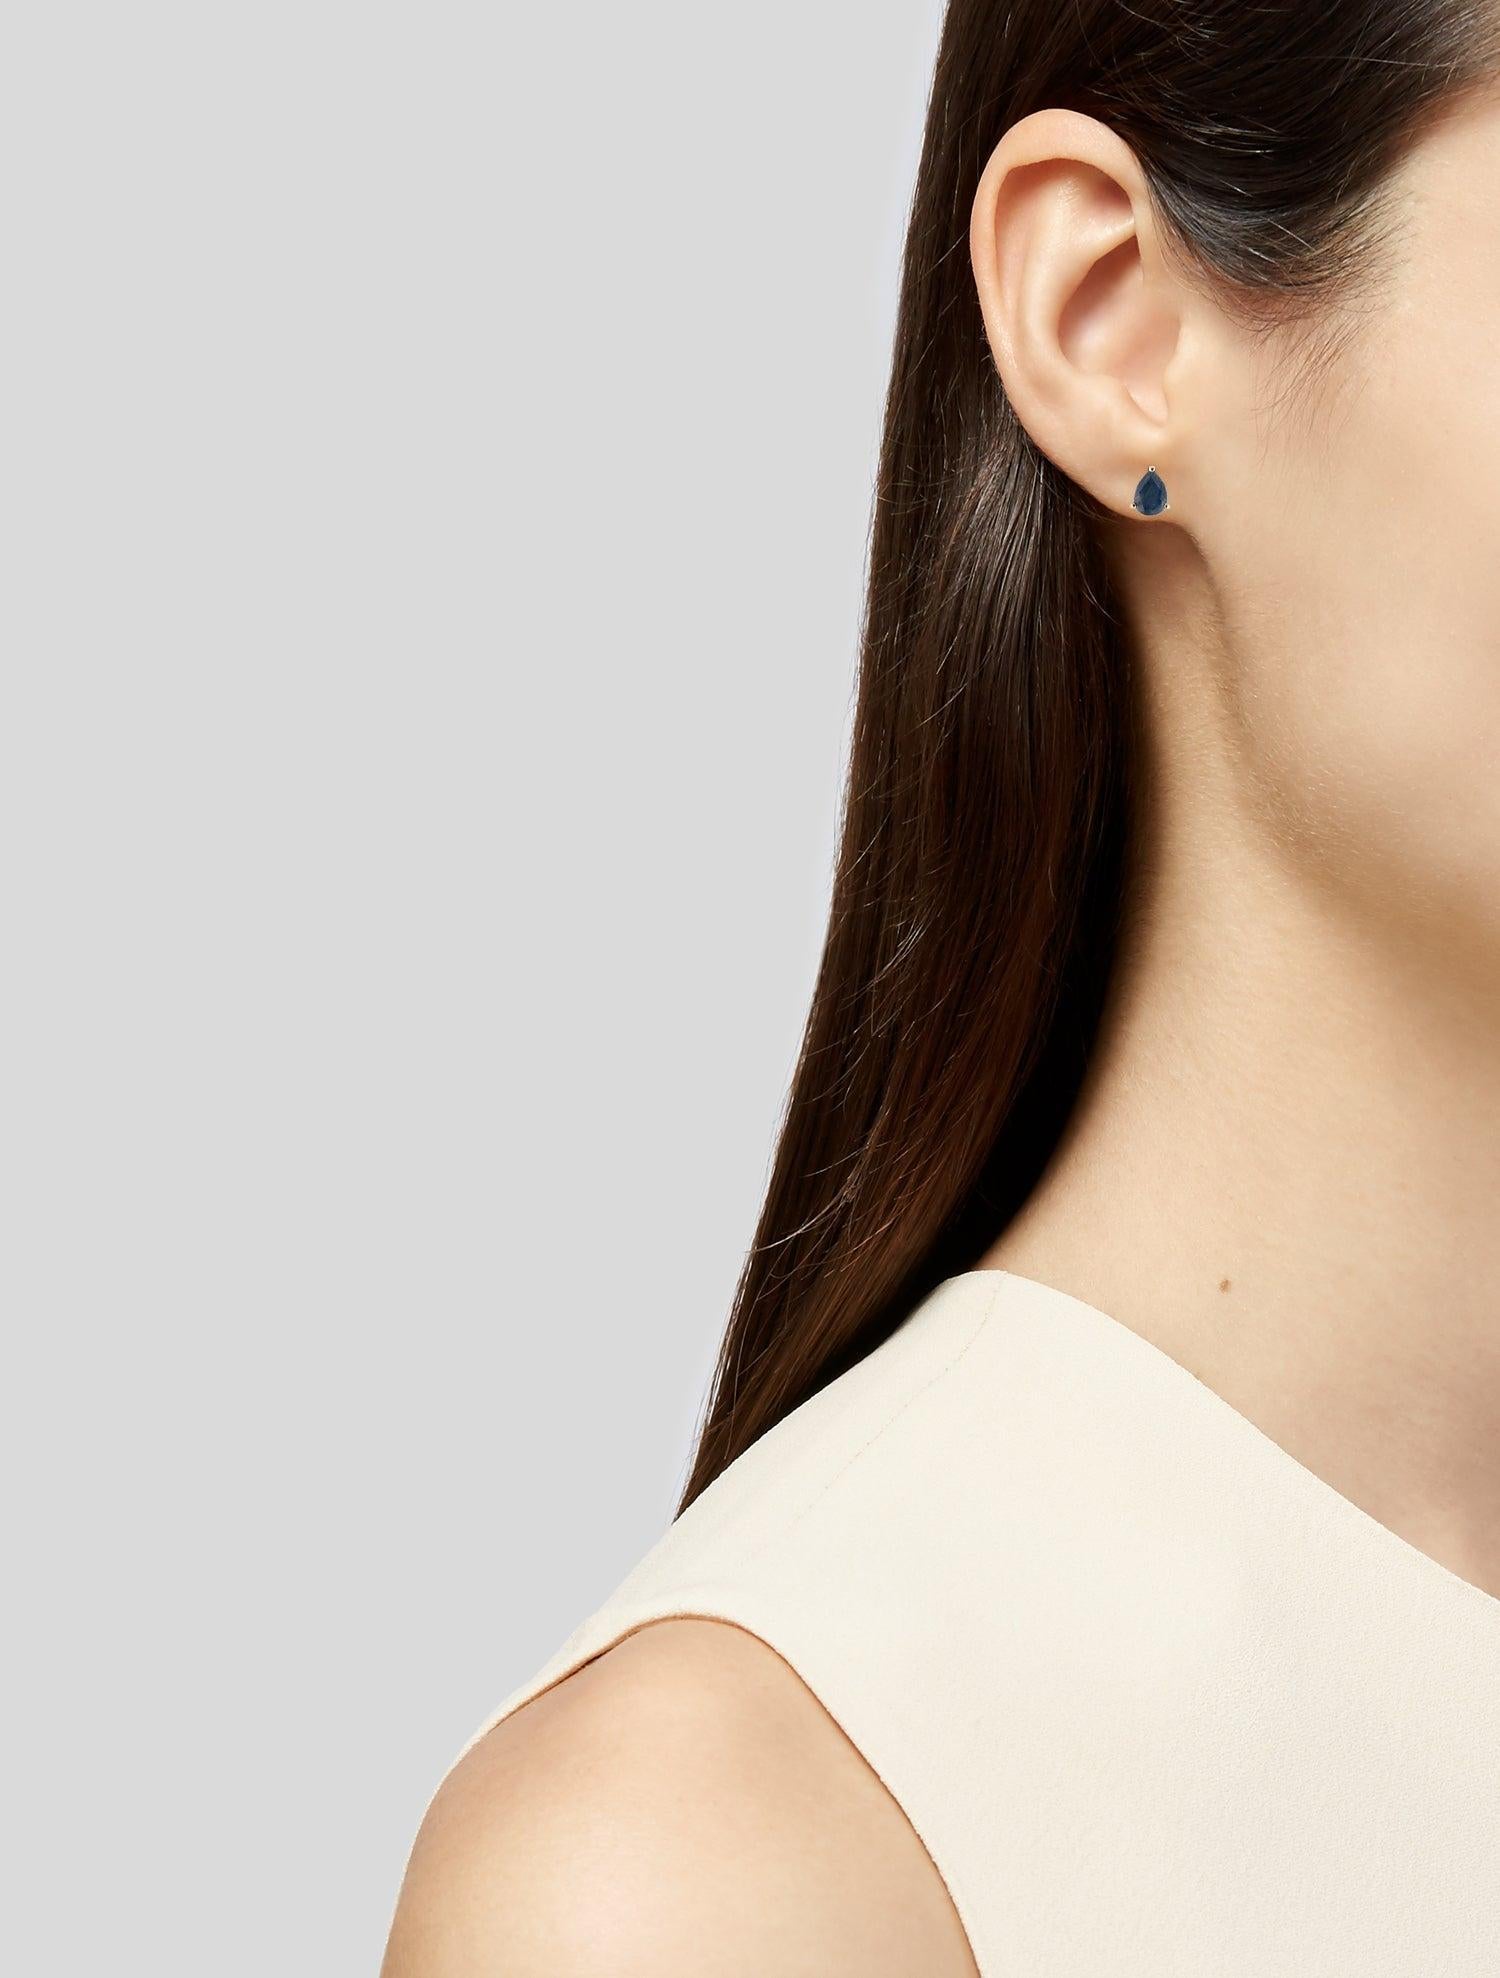 Artist Elegant 14K Yellow Gold Pear-Shaped Sapphire Stud Earrings, 1.52 Carat For Sale